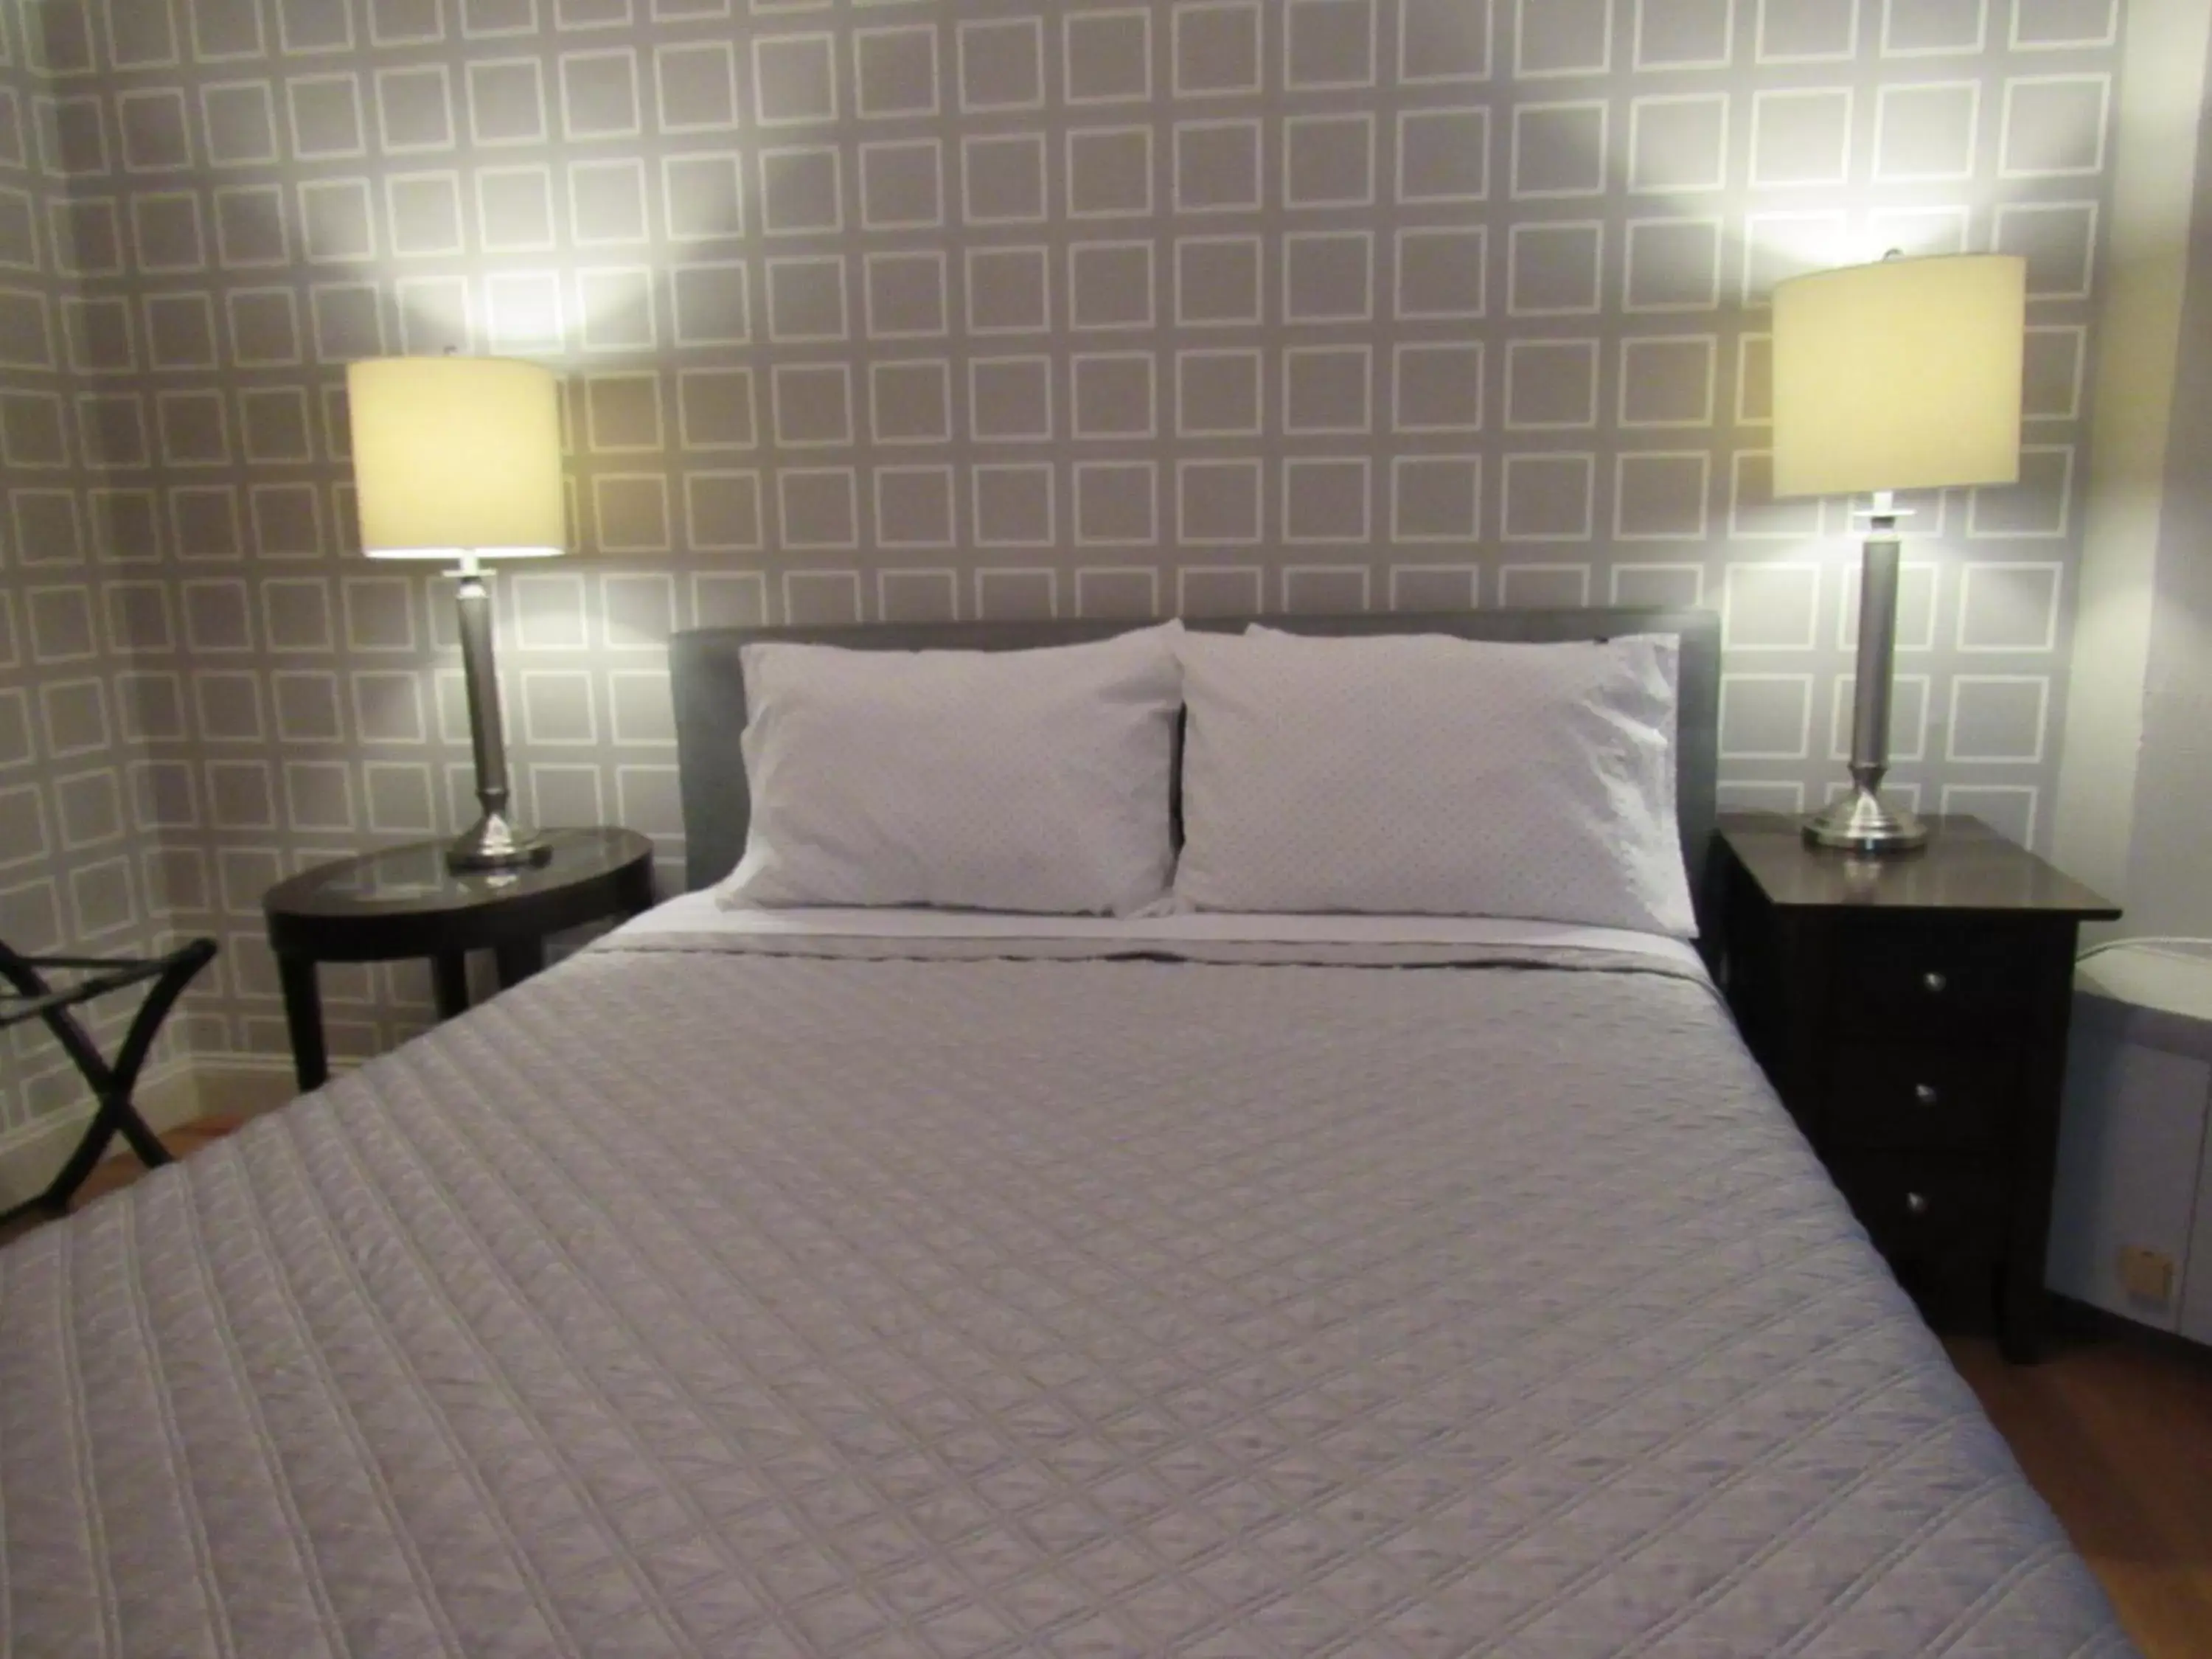 Bed, Room Photo in Washington Park Inn